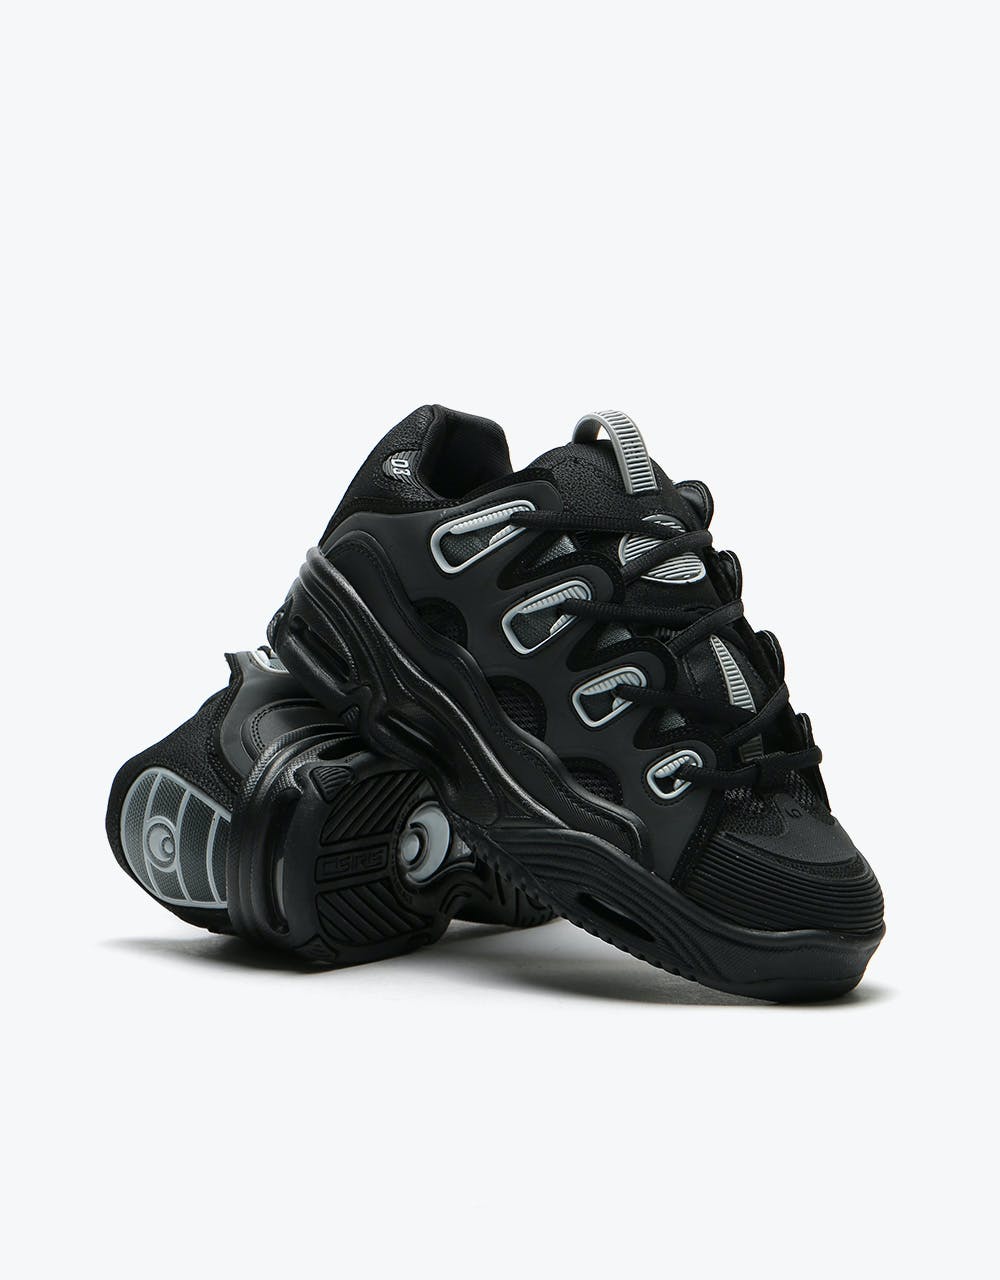 Osiris D3 2001 Skate Shoes - Black/Light Grey/Fade